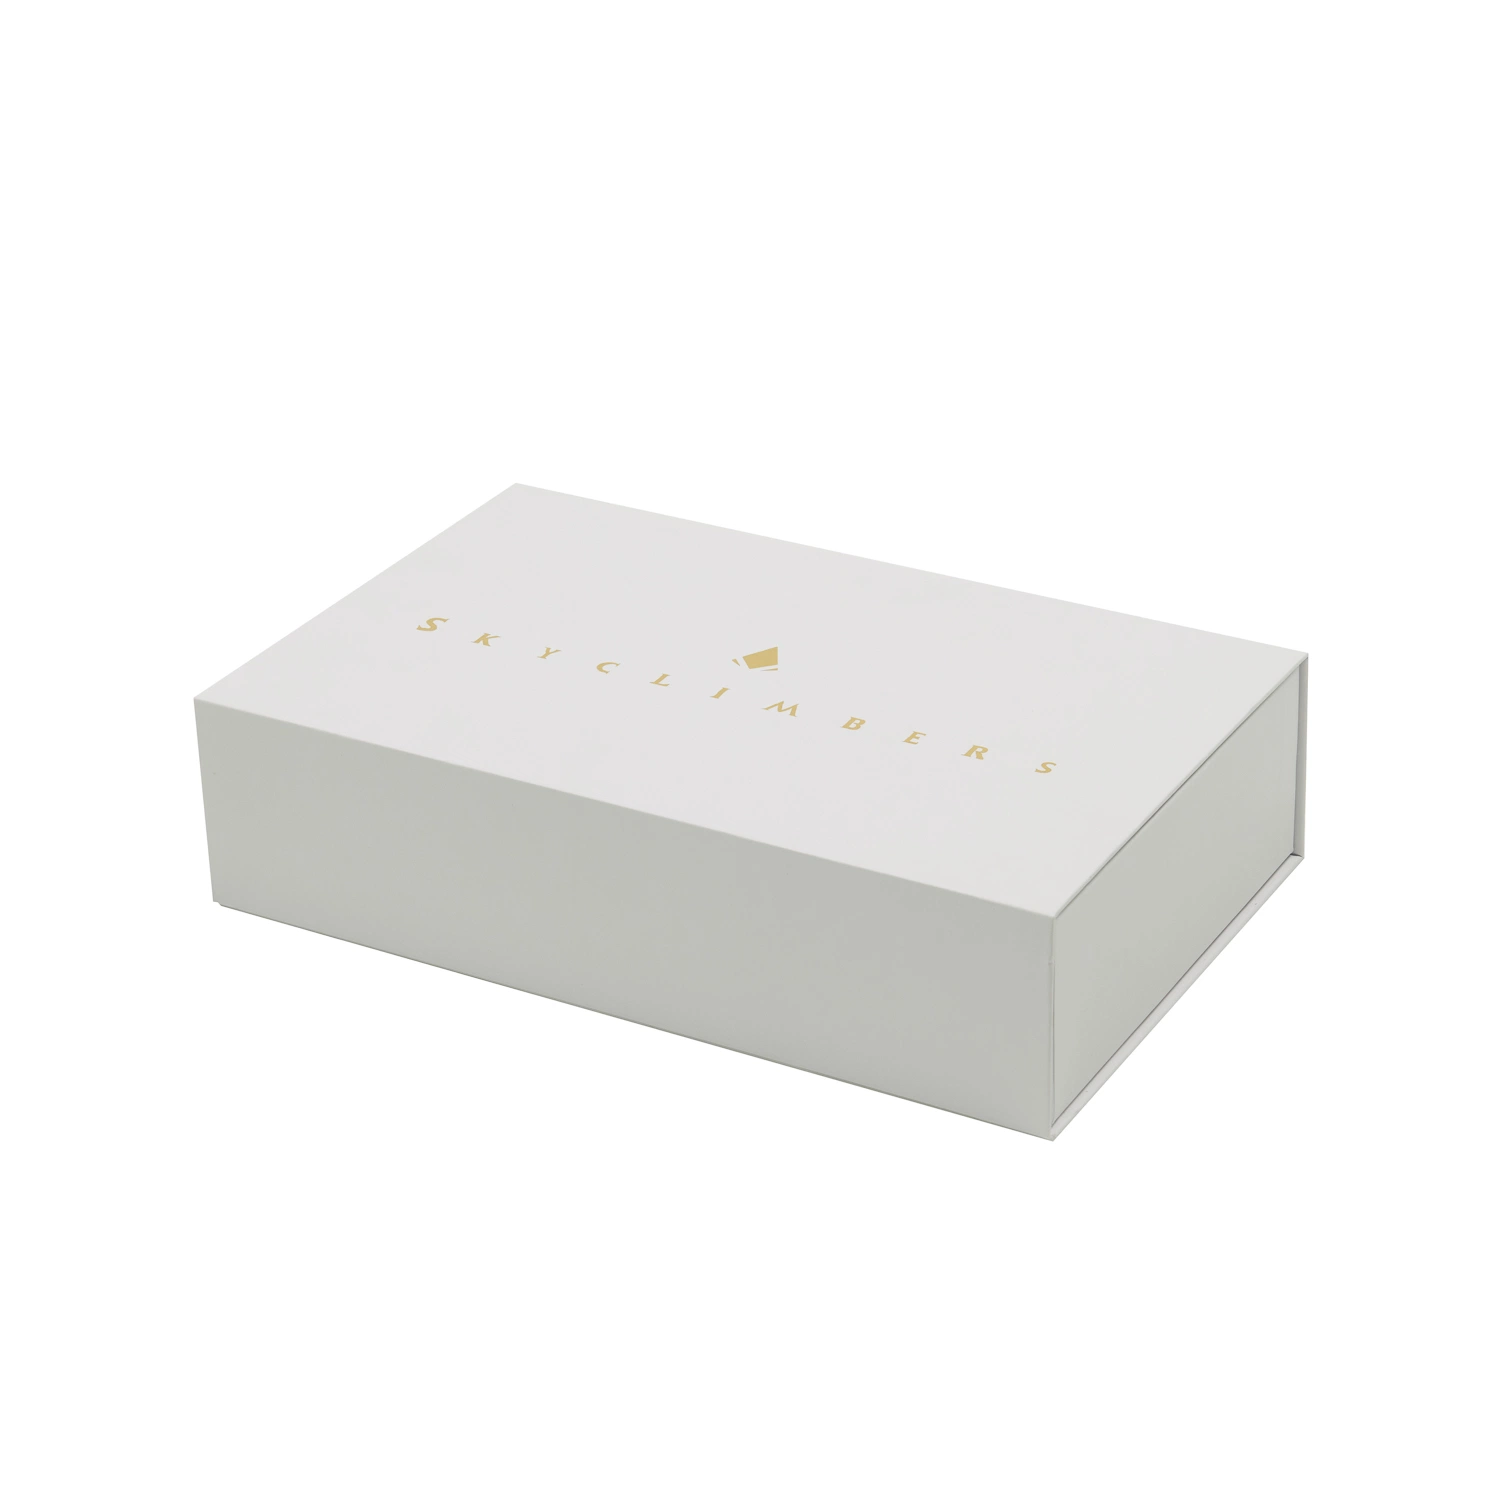 Modern Novel Design Luxury Game Player Package Gift Box